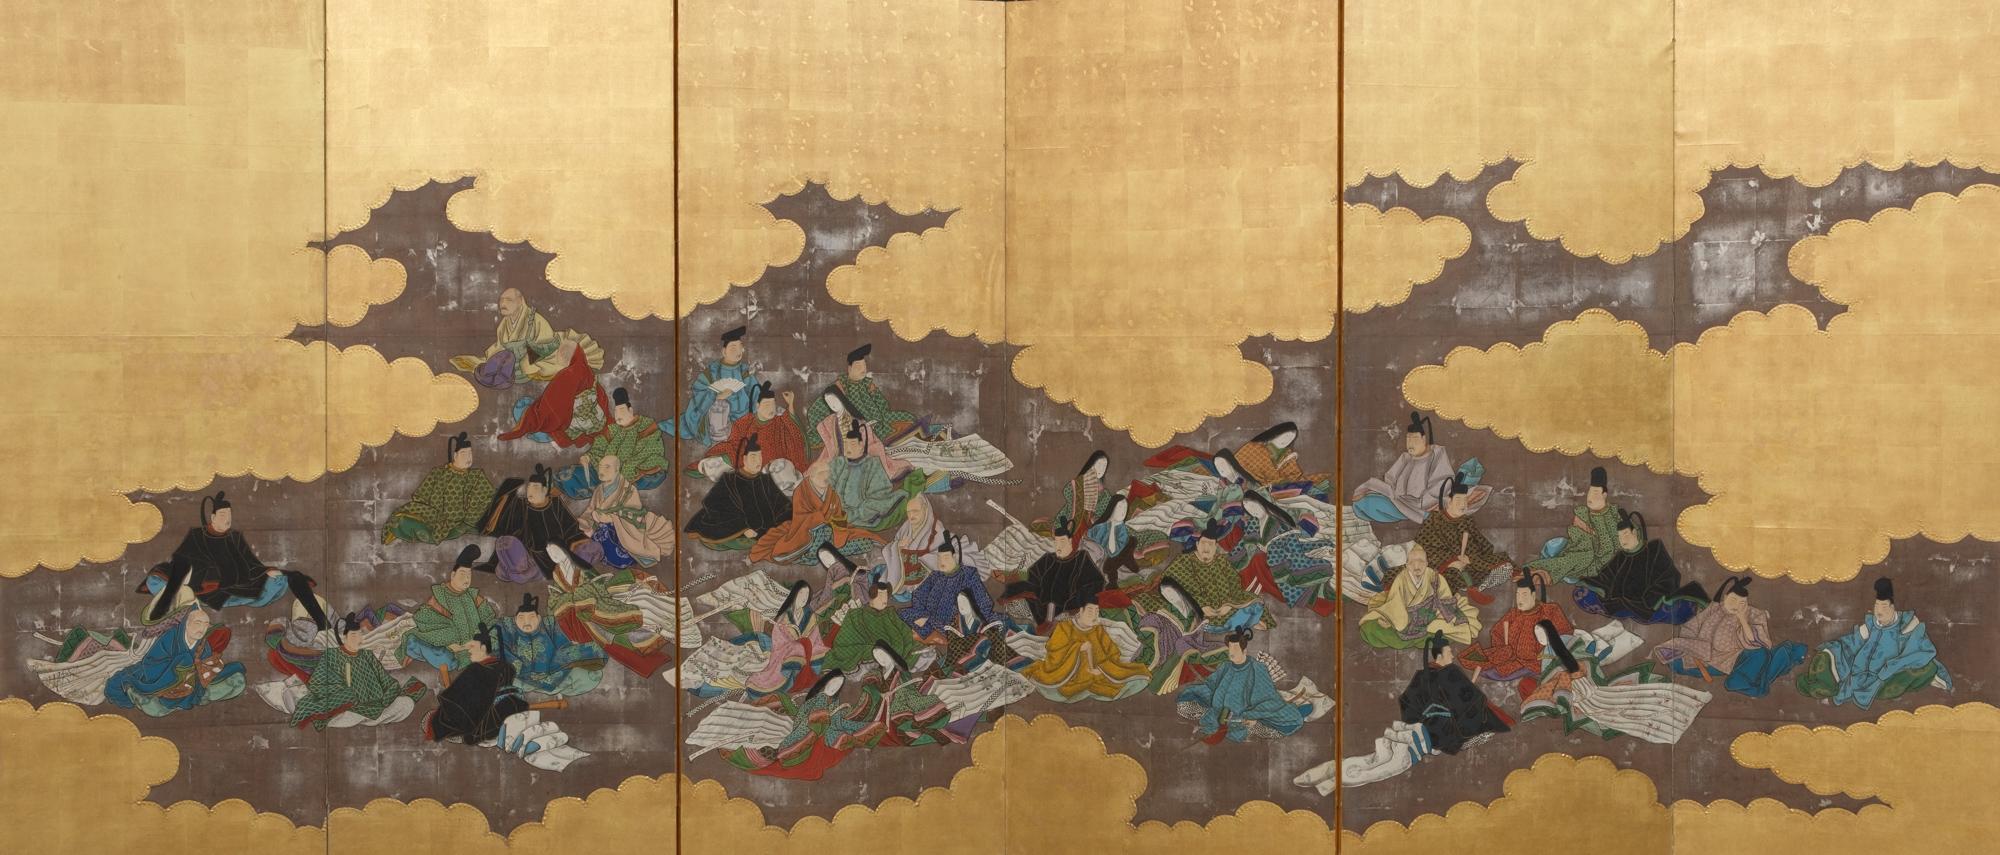 Hand-Painted Pair of Japanese folding screens (byôbu) of poets from ‘Hyakunin isshu’ 百人一首